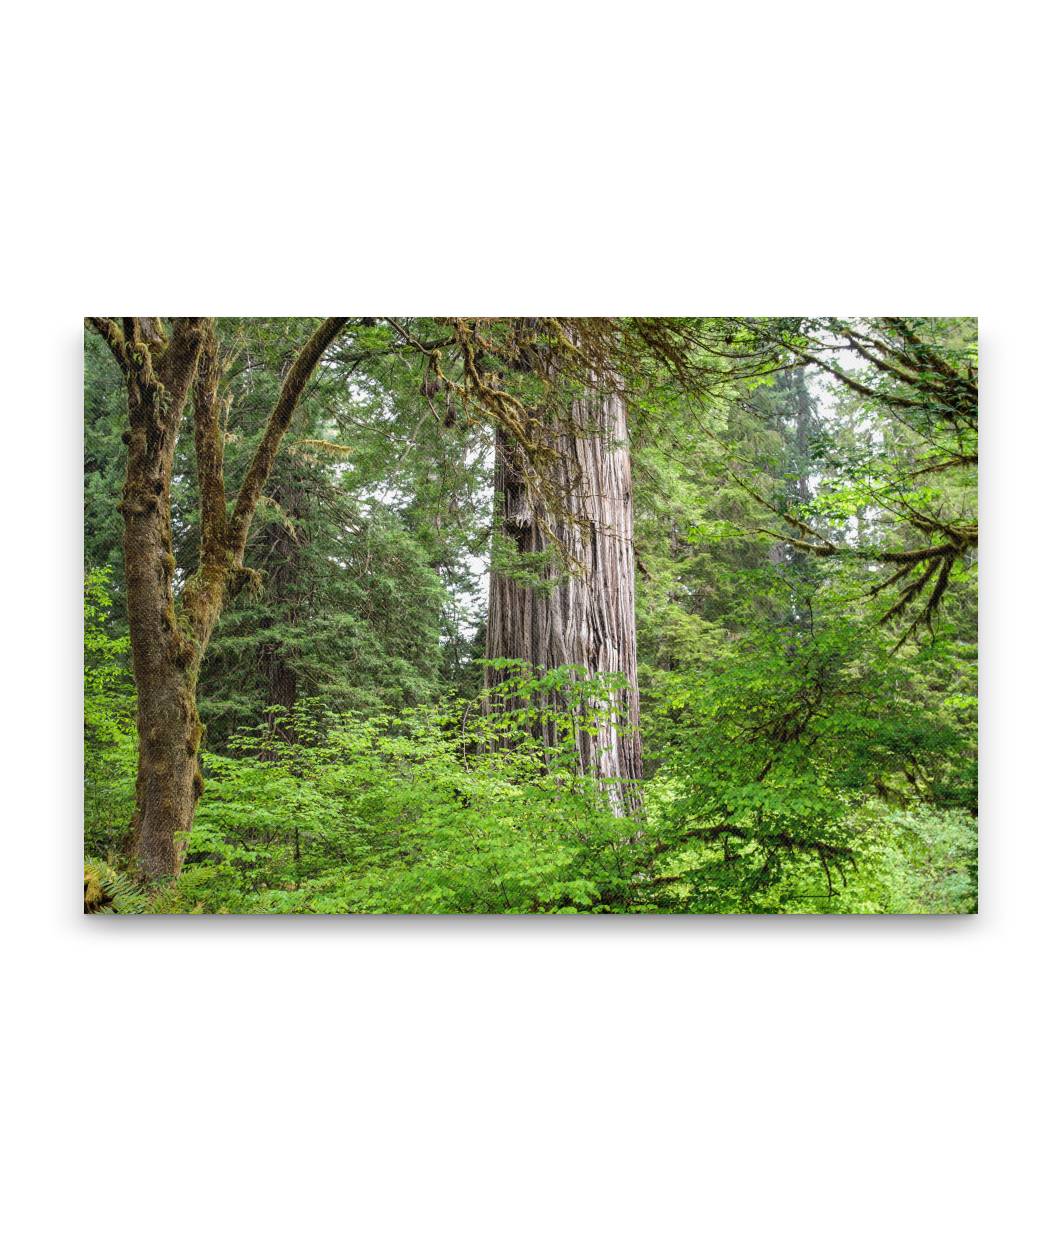 Coastal redwood, Prairie Creek Redwoods State Park, California, USA